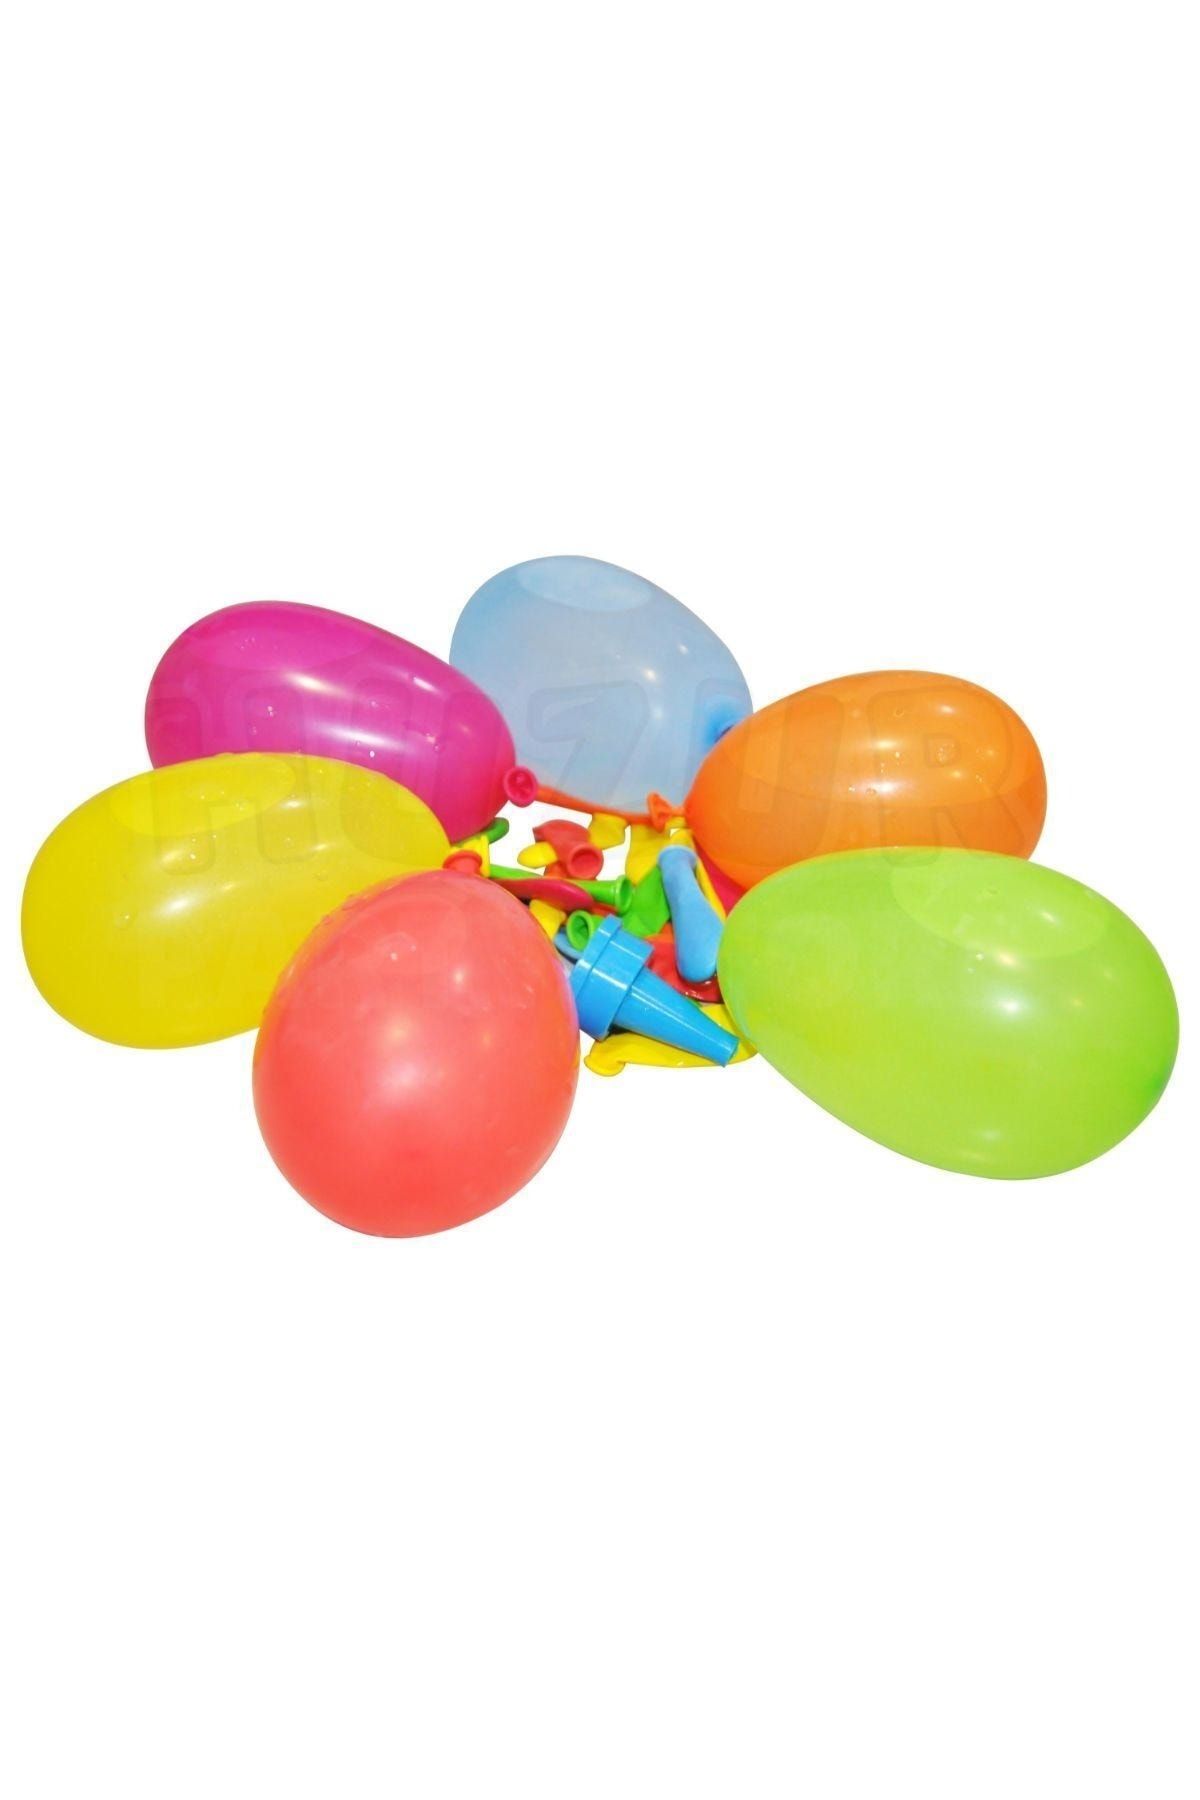 Huzur Party Store Su Balonu 10 Adet 10 Cm Renk Renk Su Topu Su Savaşı Balonu Balon Bombası Küçük Su Doldurulan Balon